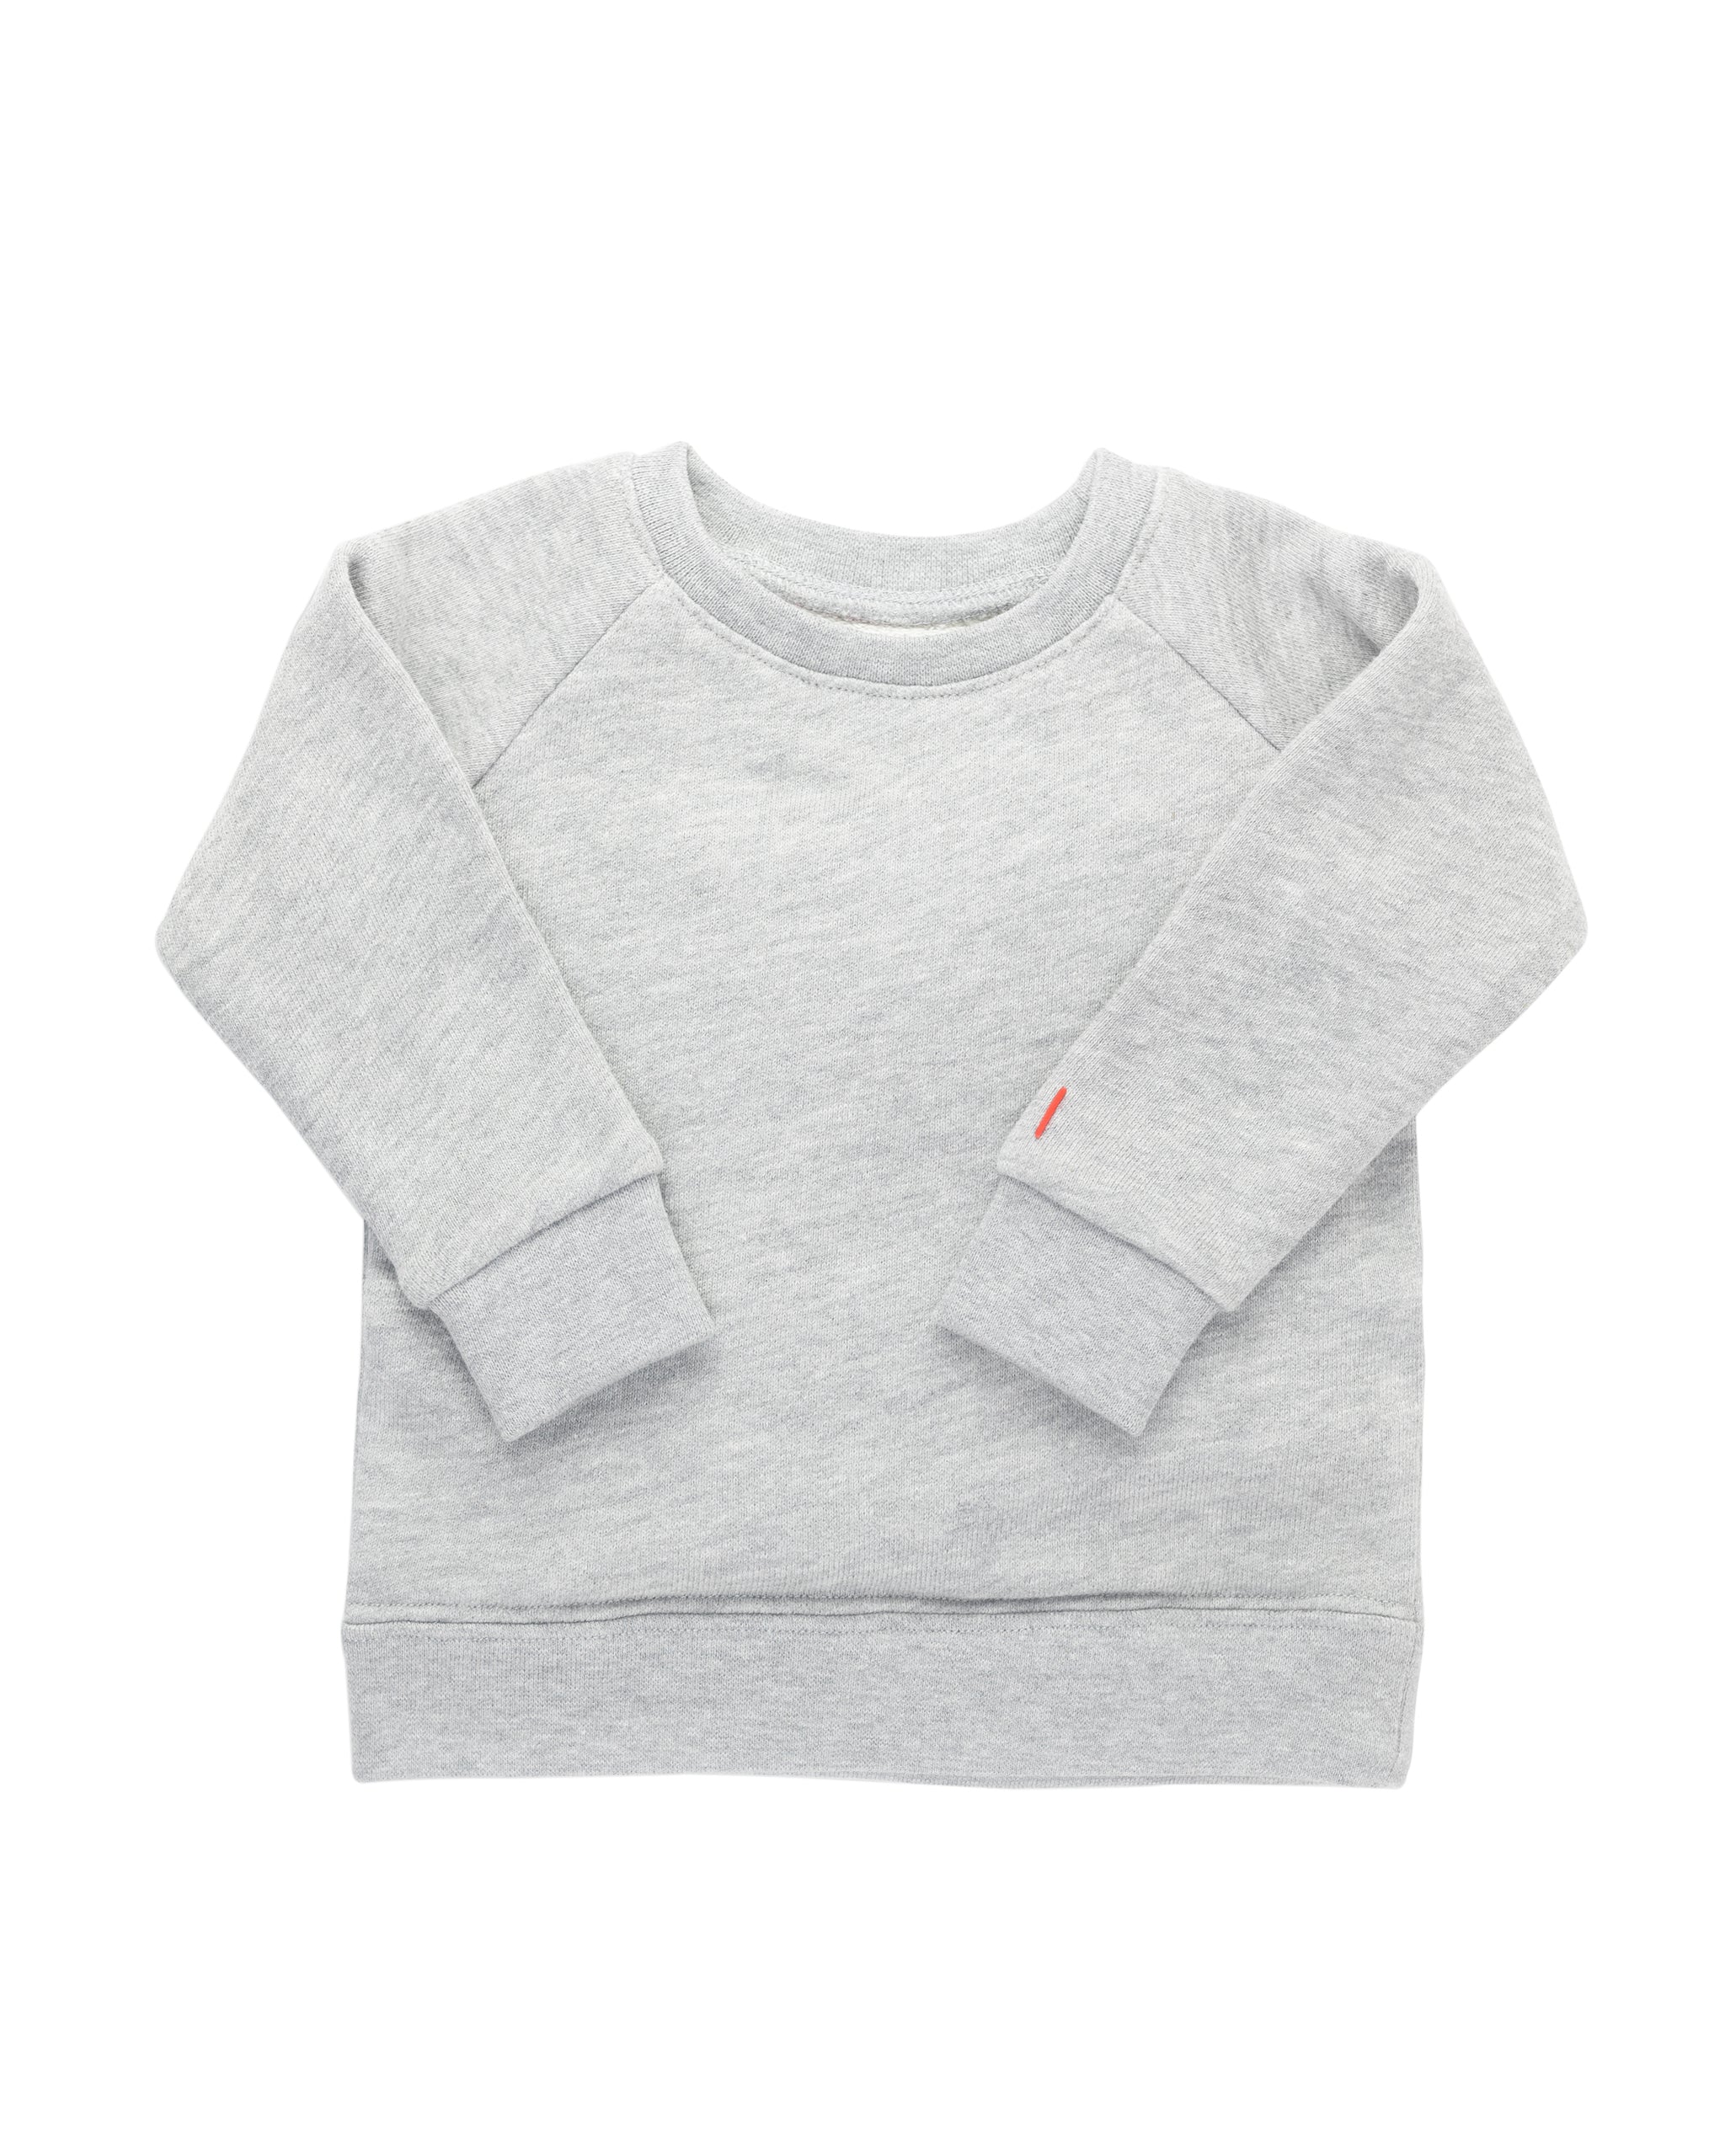 Plain Crewn Neck Sweatshirt, Light Grey